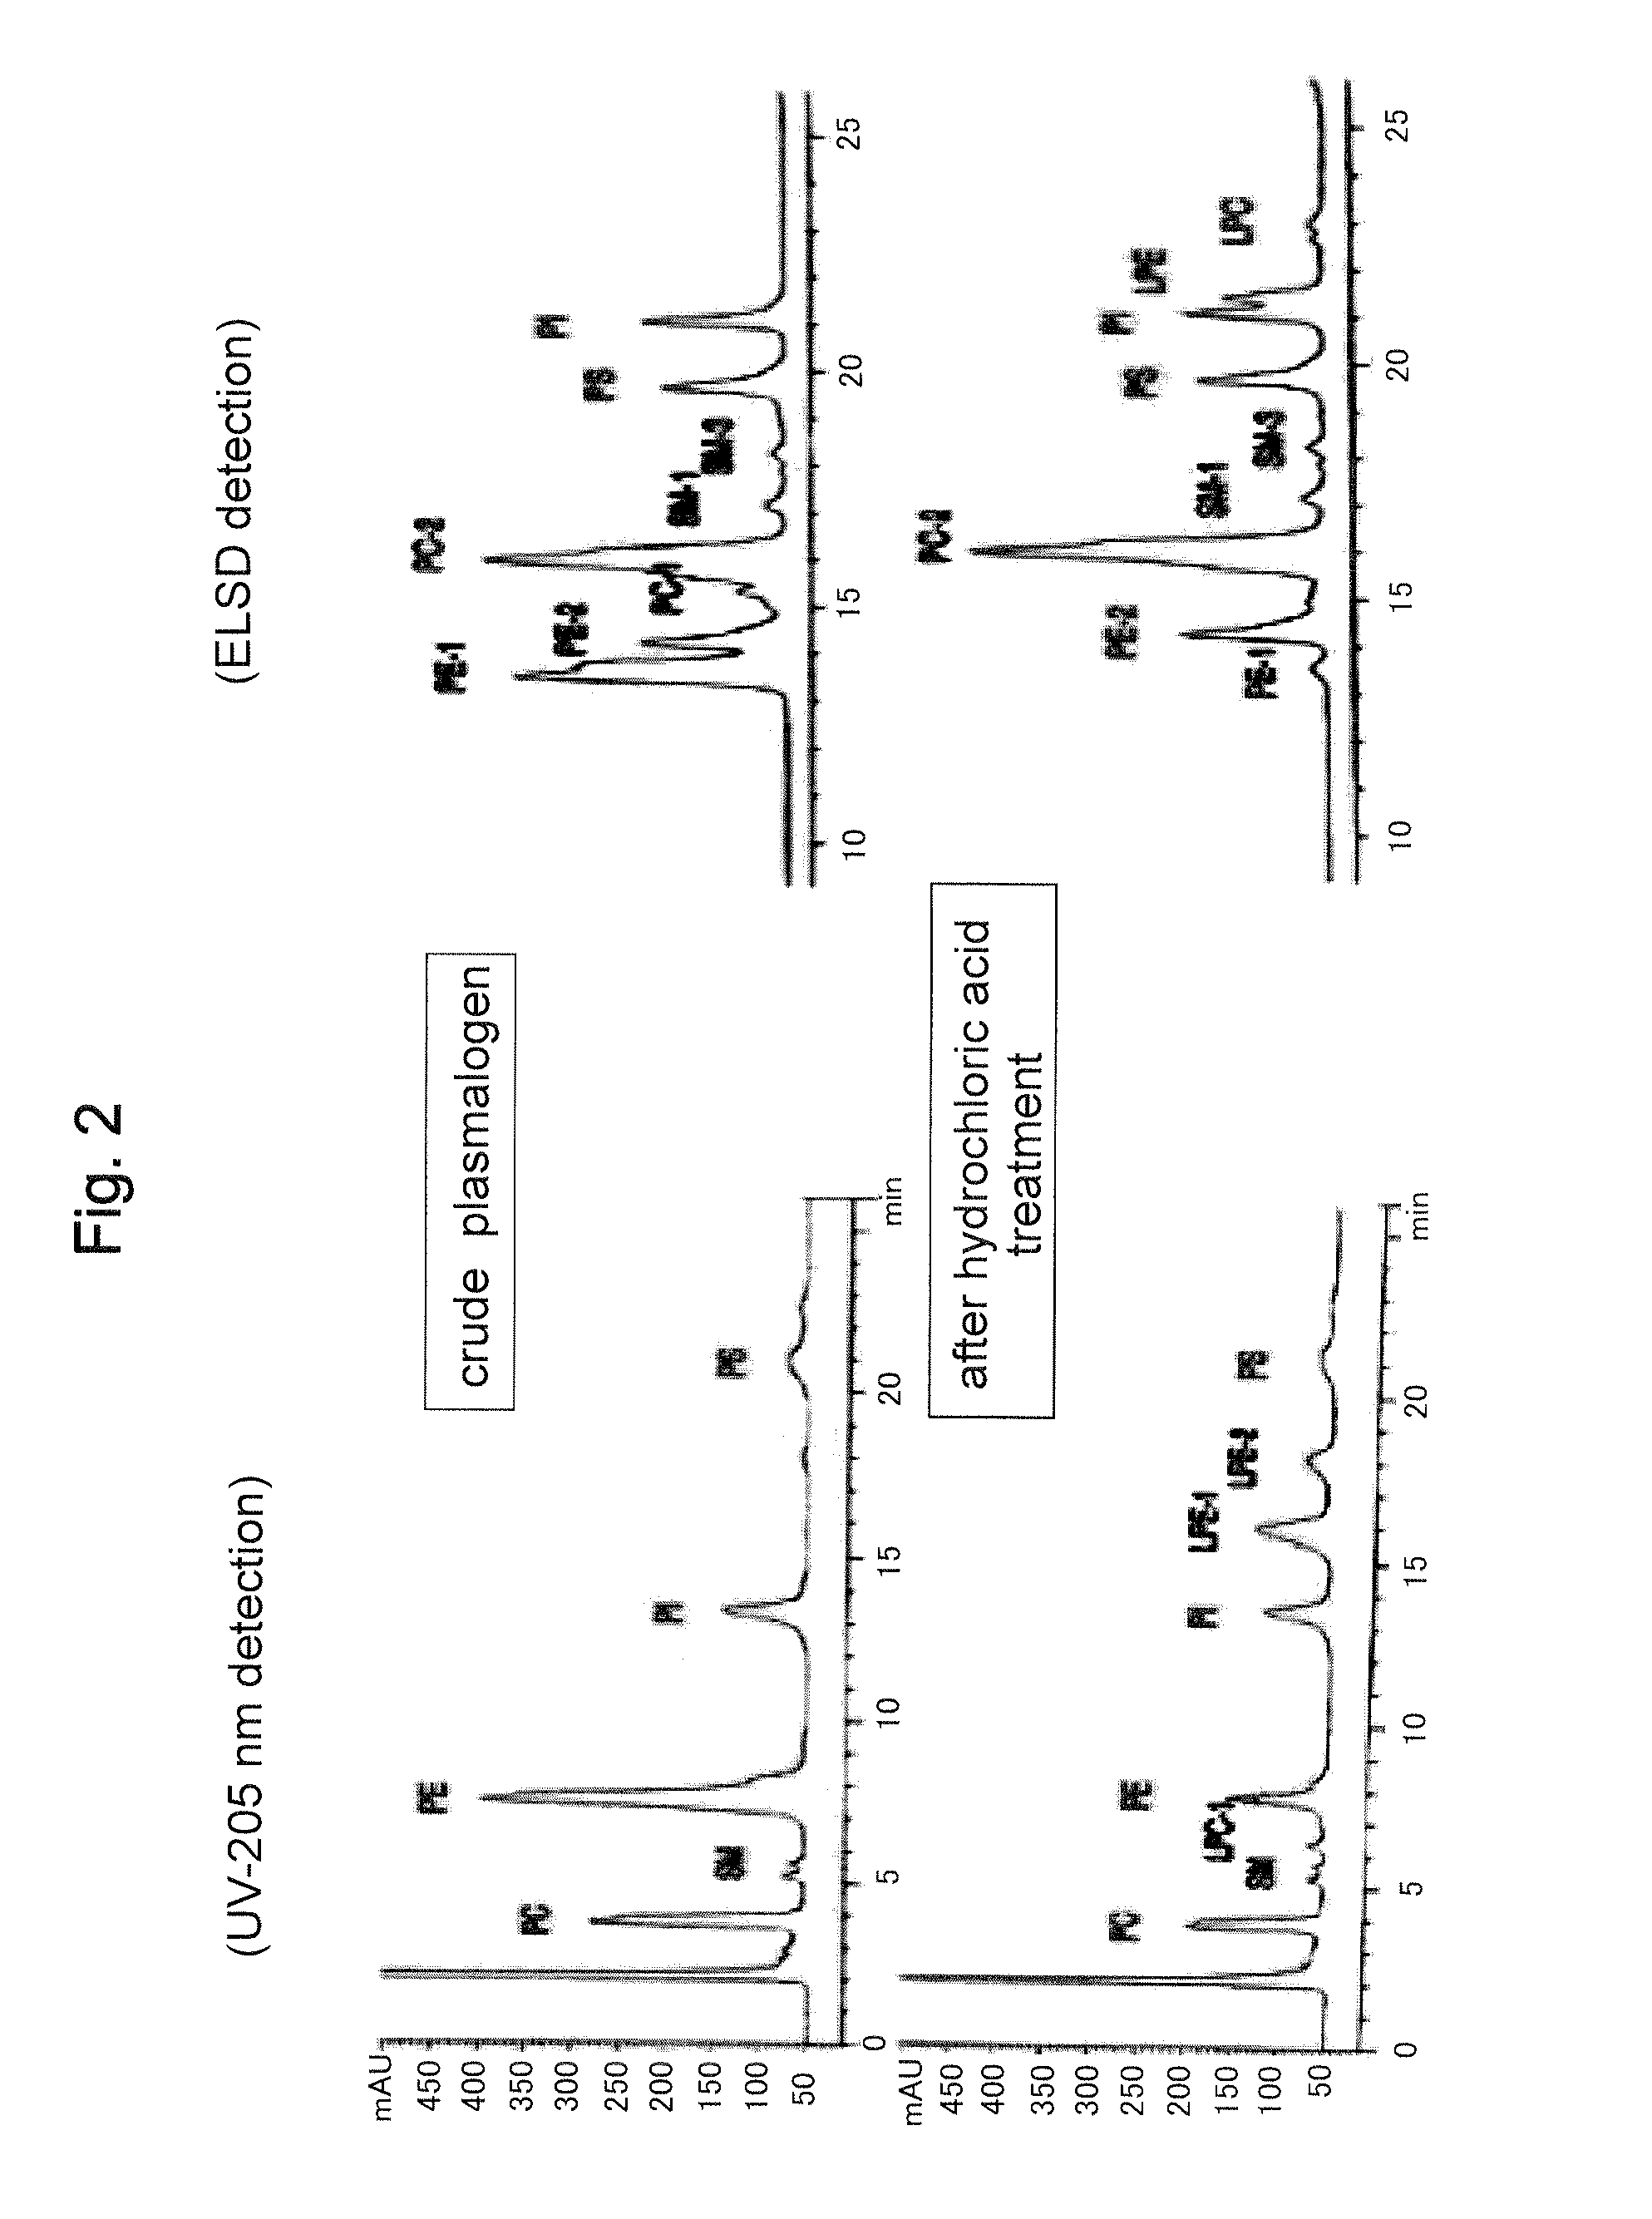 Process for producing sphingomyelin and plasmalogen-form glycerophospholipid